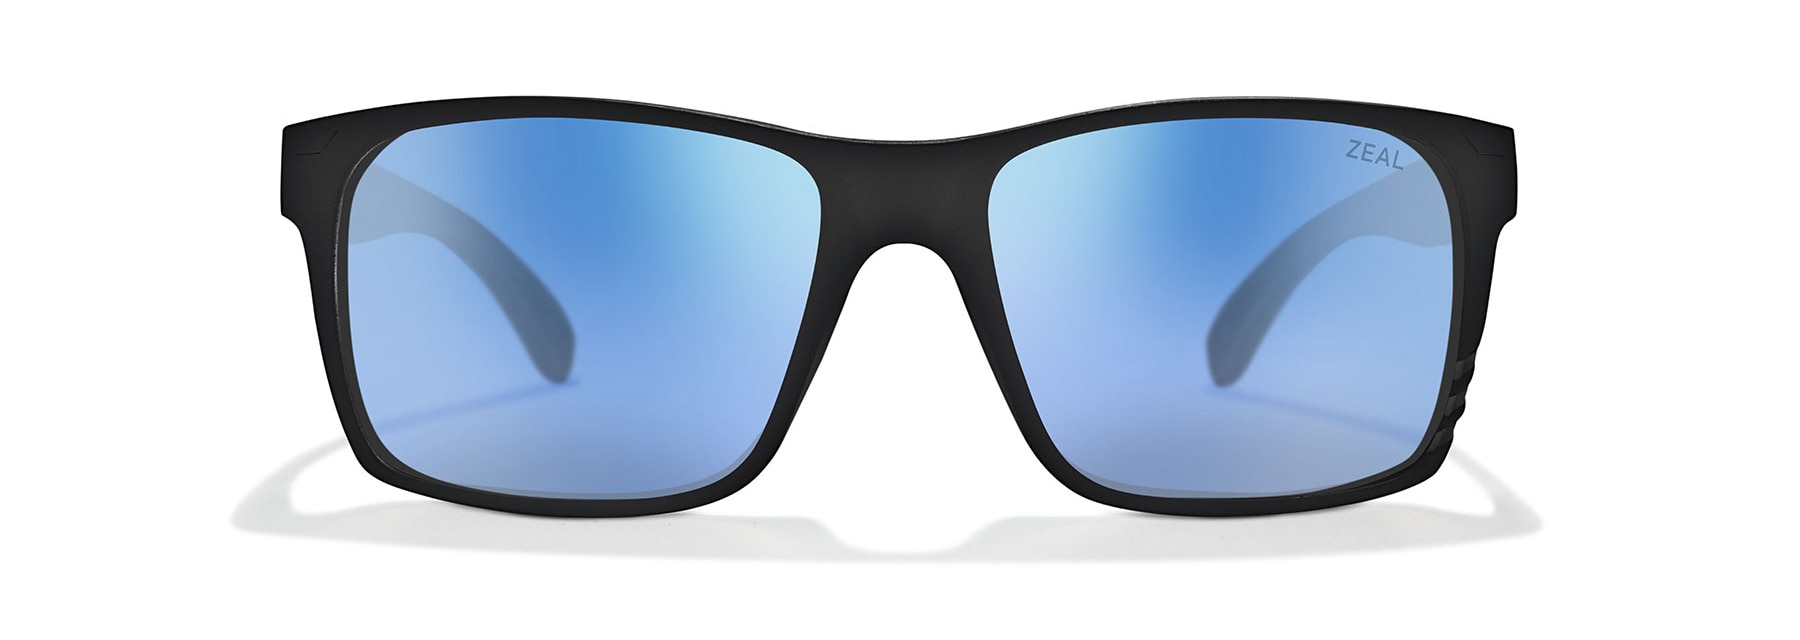 Shop DIVIDE (Z1838) Sunglasses by Zeal | Zeal Optics